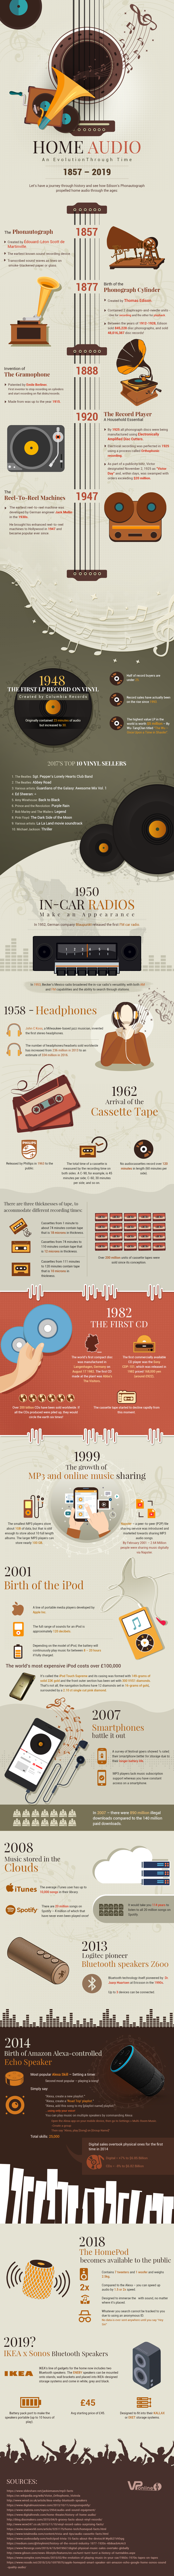 Home Audio Evolution infographic on Bobby Owsinski's Production Blog